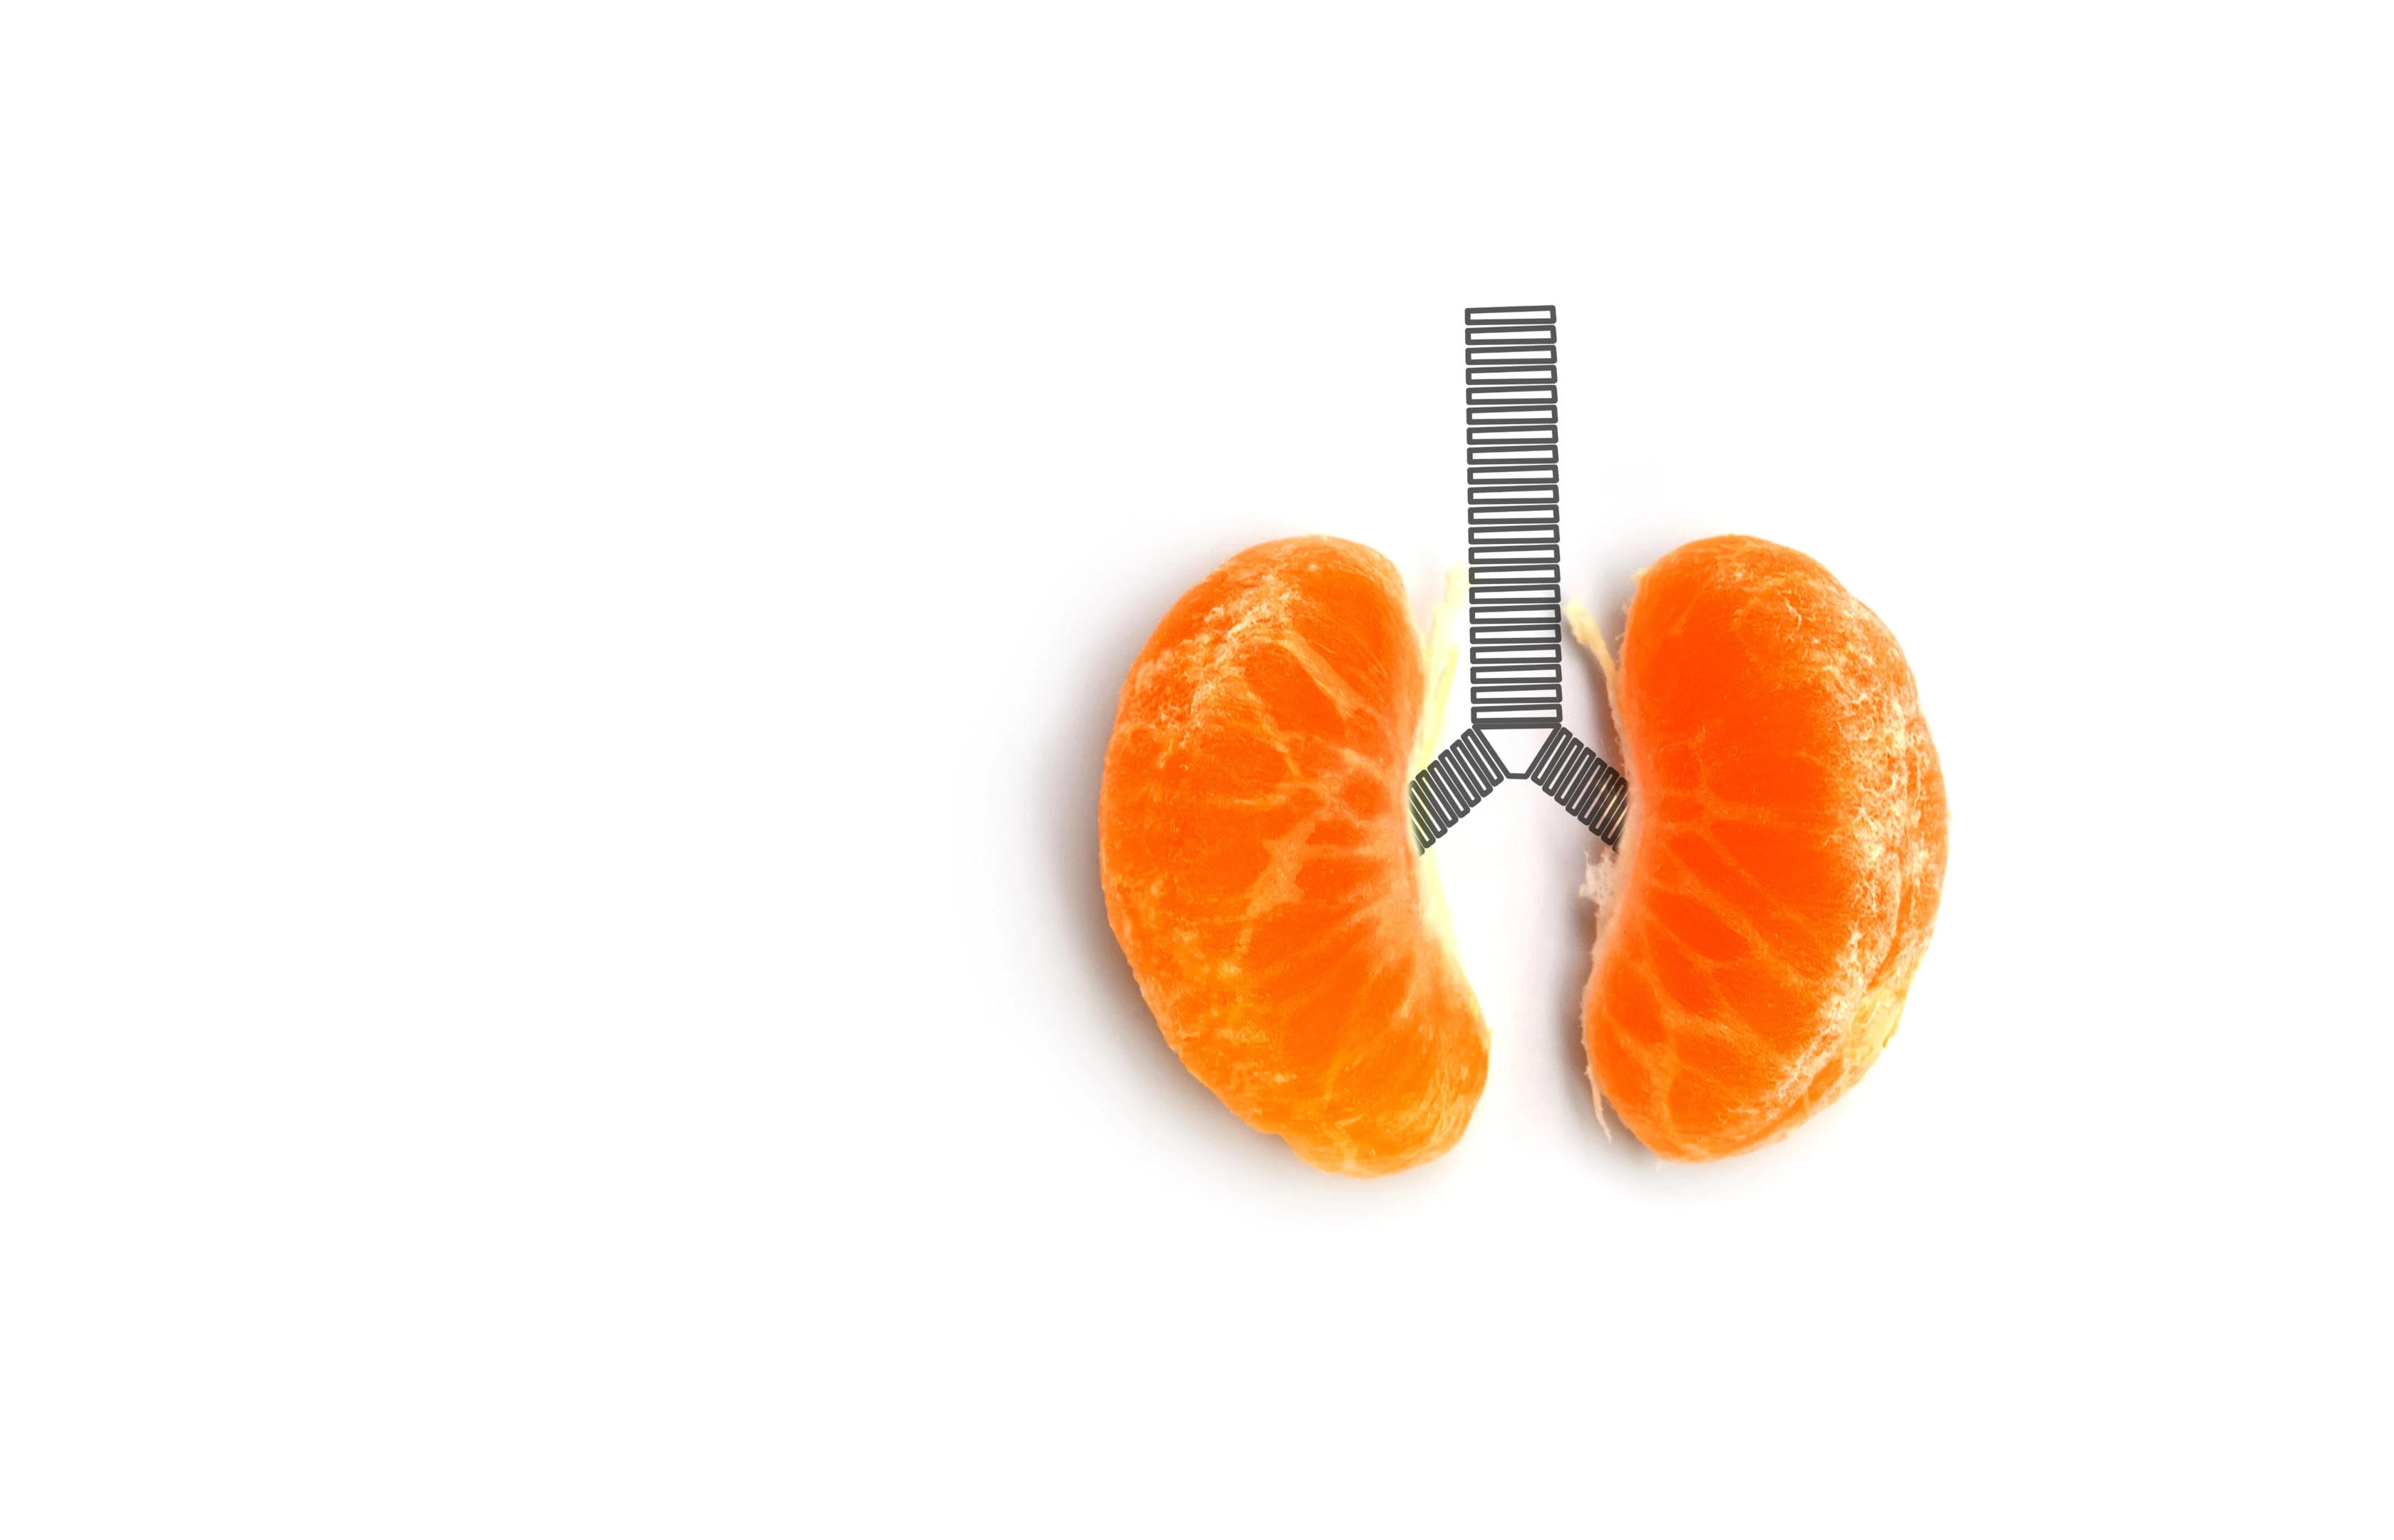 Tangerines concept kidneys on white background